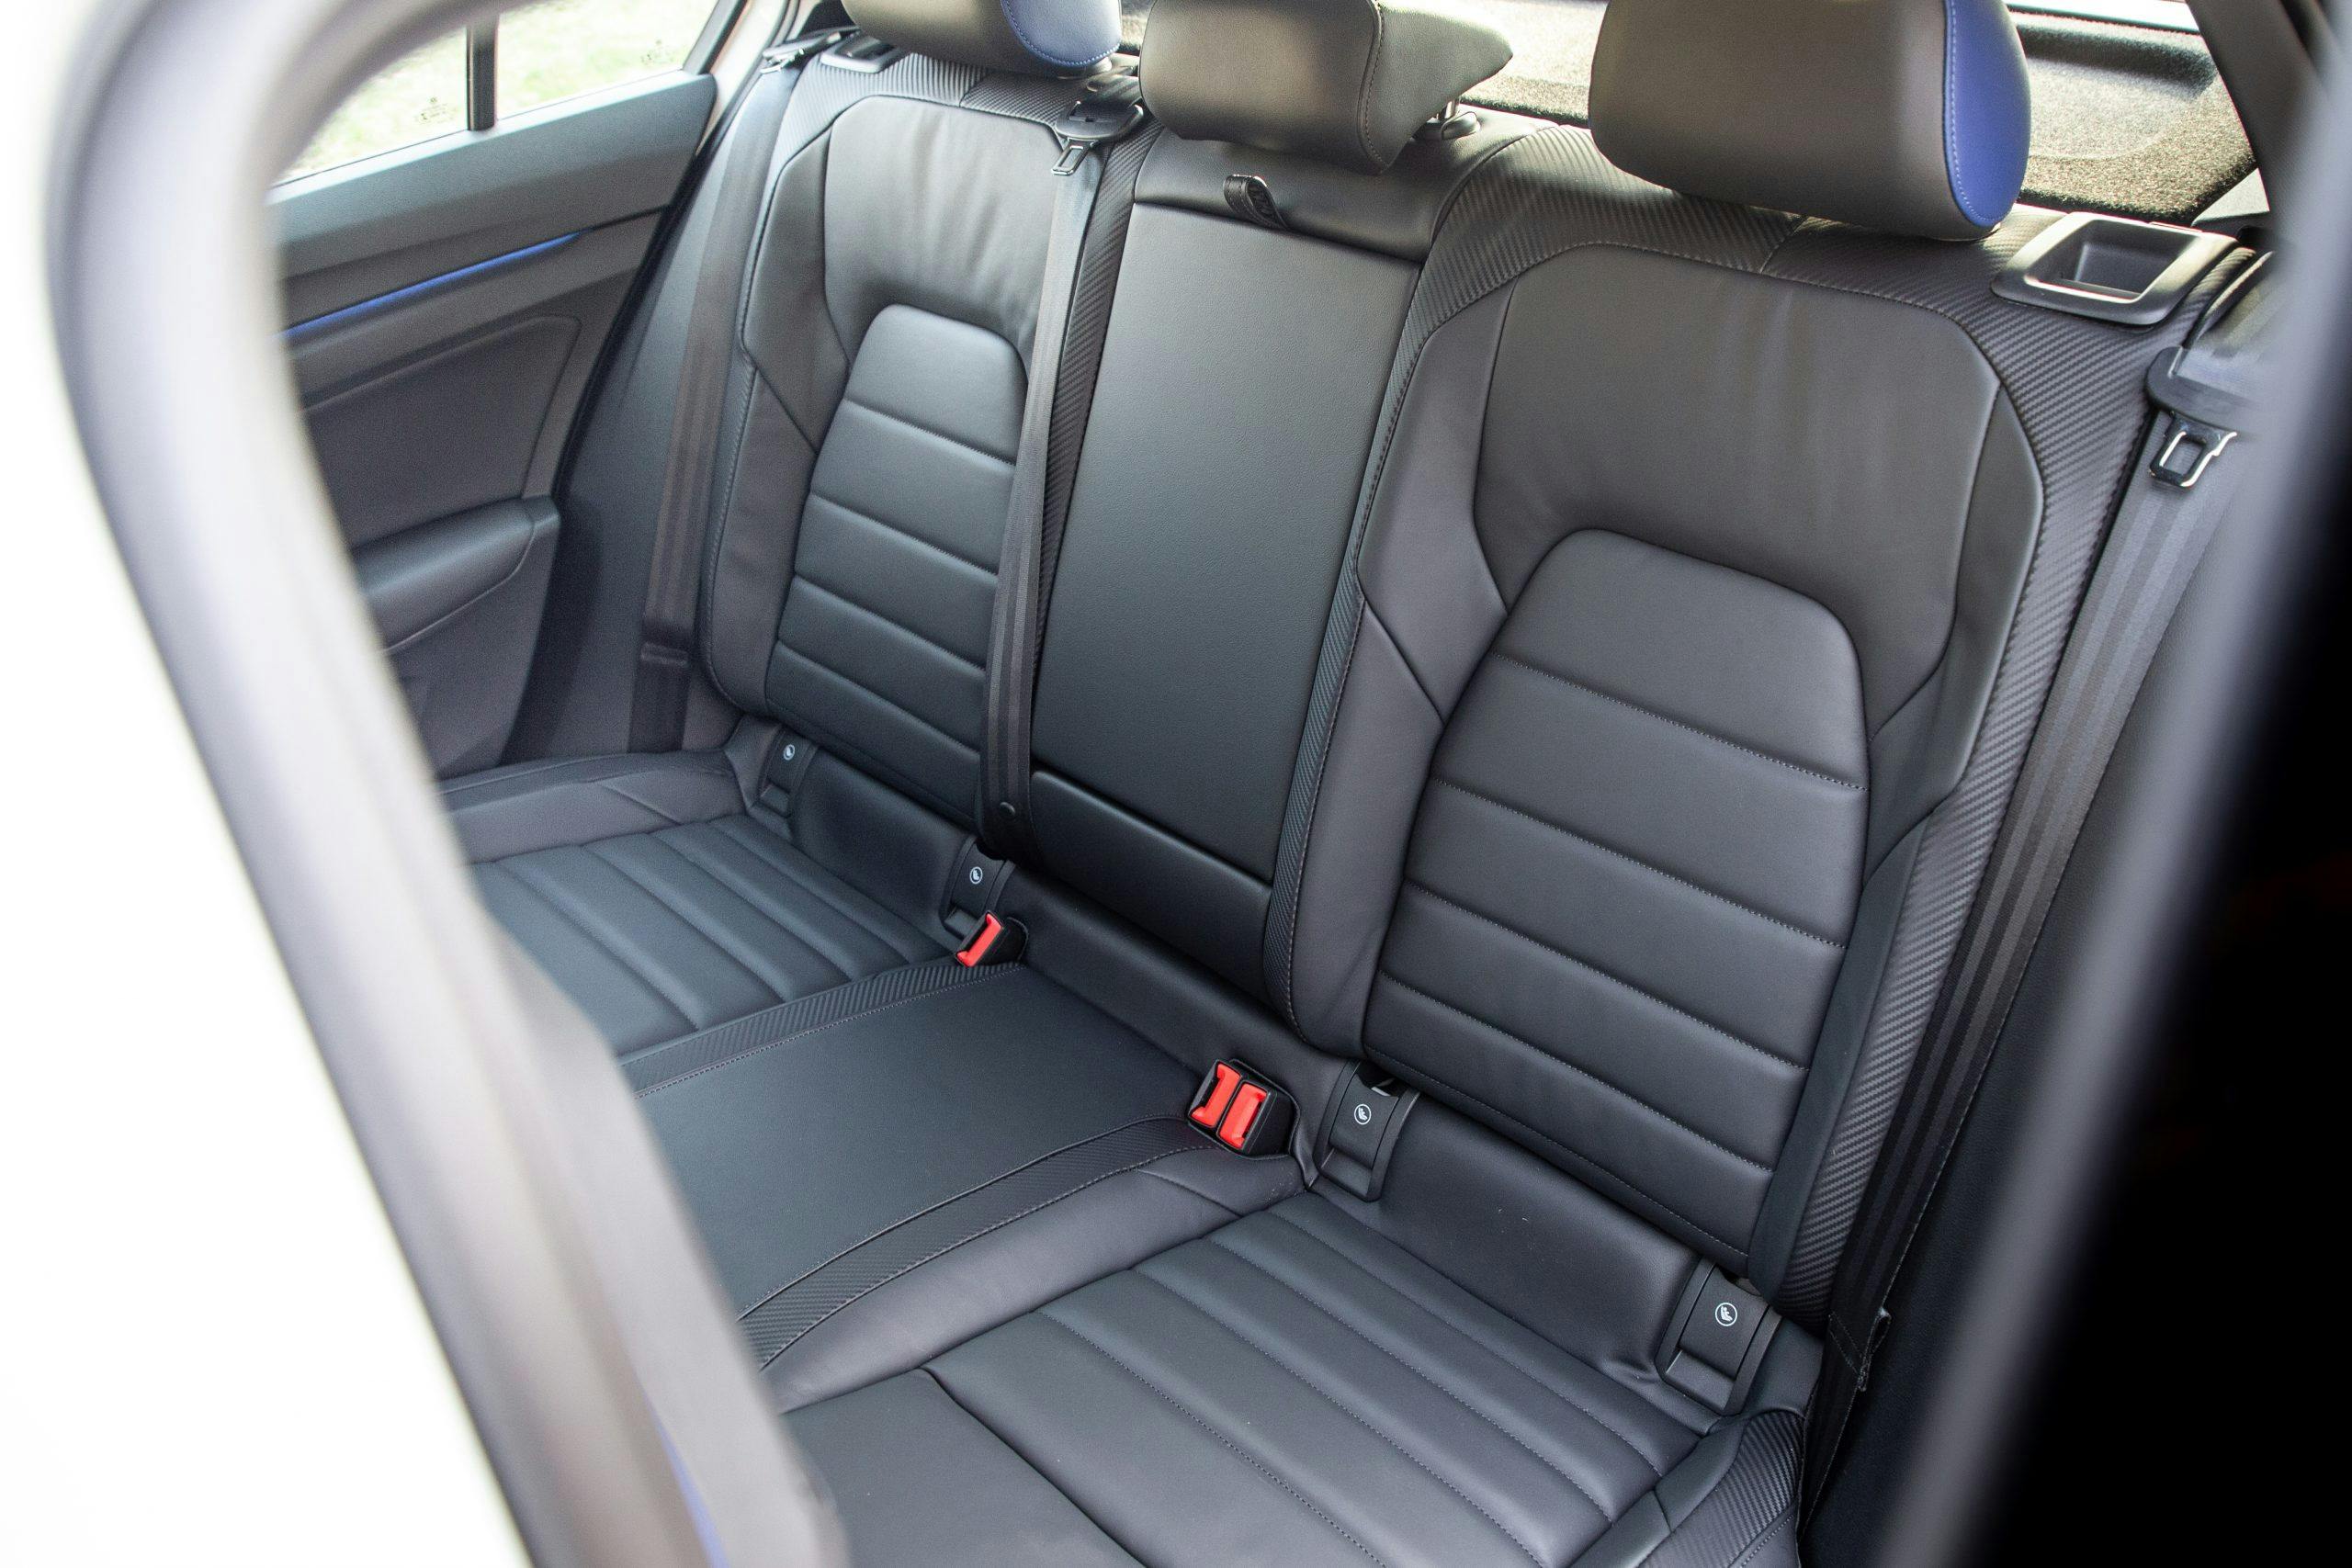 VW Golf R interior rear seat